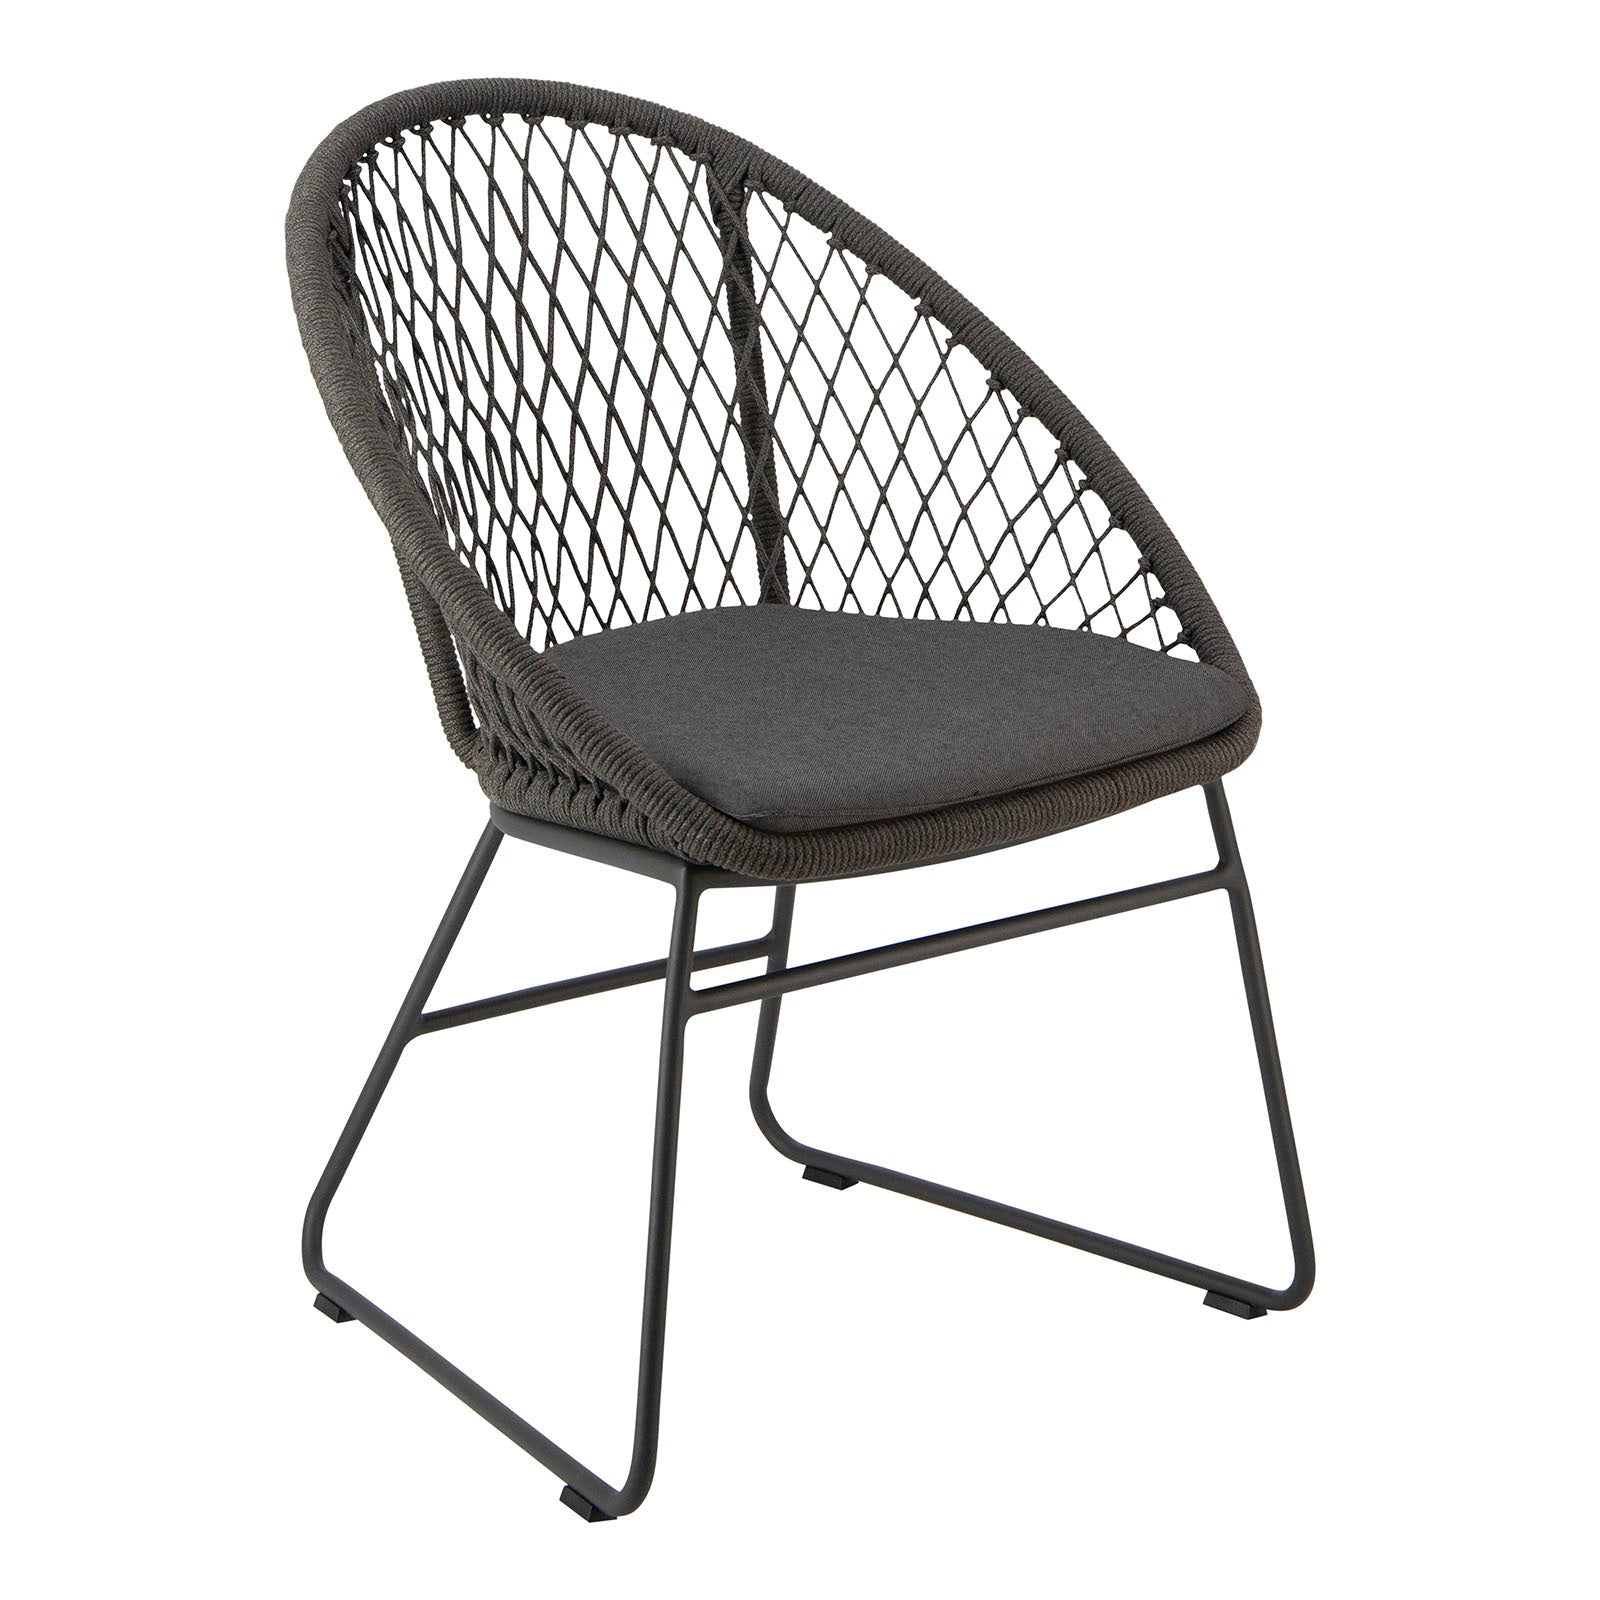 Zaha Cross Weave Outdoor Dining Chair - Agora Panama Coal